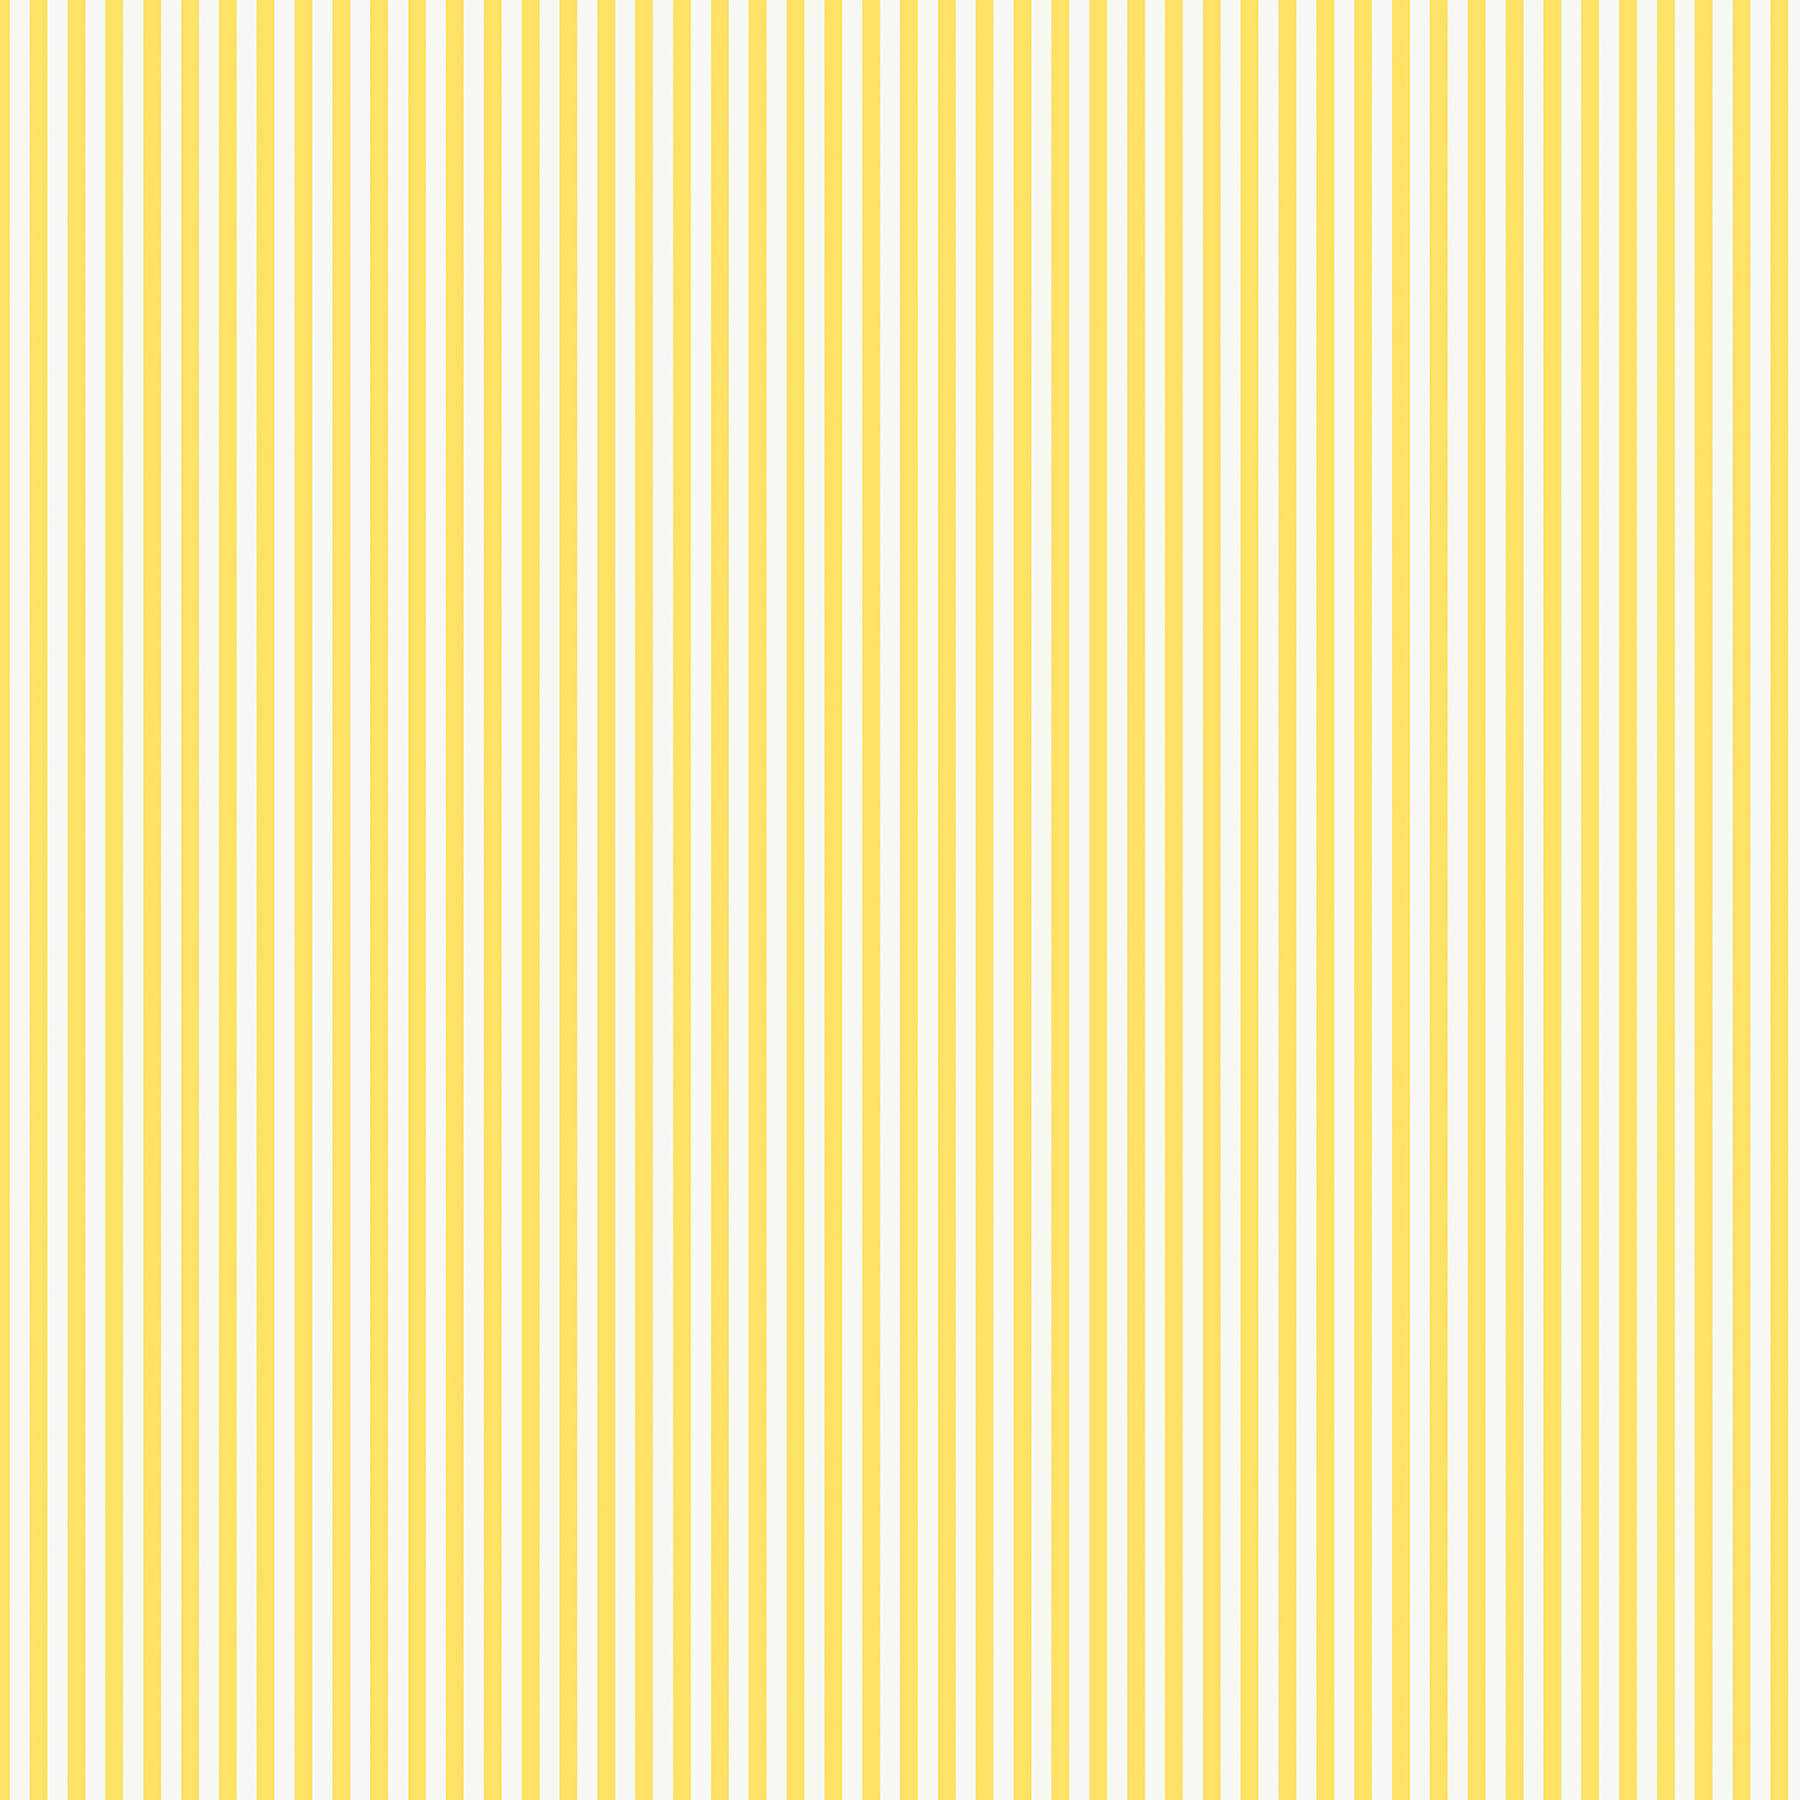 Joules Country Critters Ticking Stripe Lemon Wallpaper - 10m x 52cm